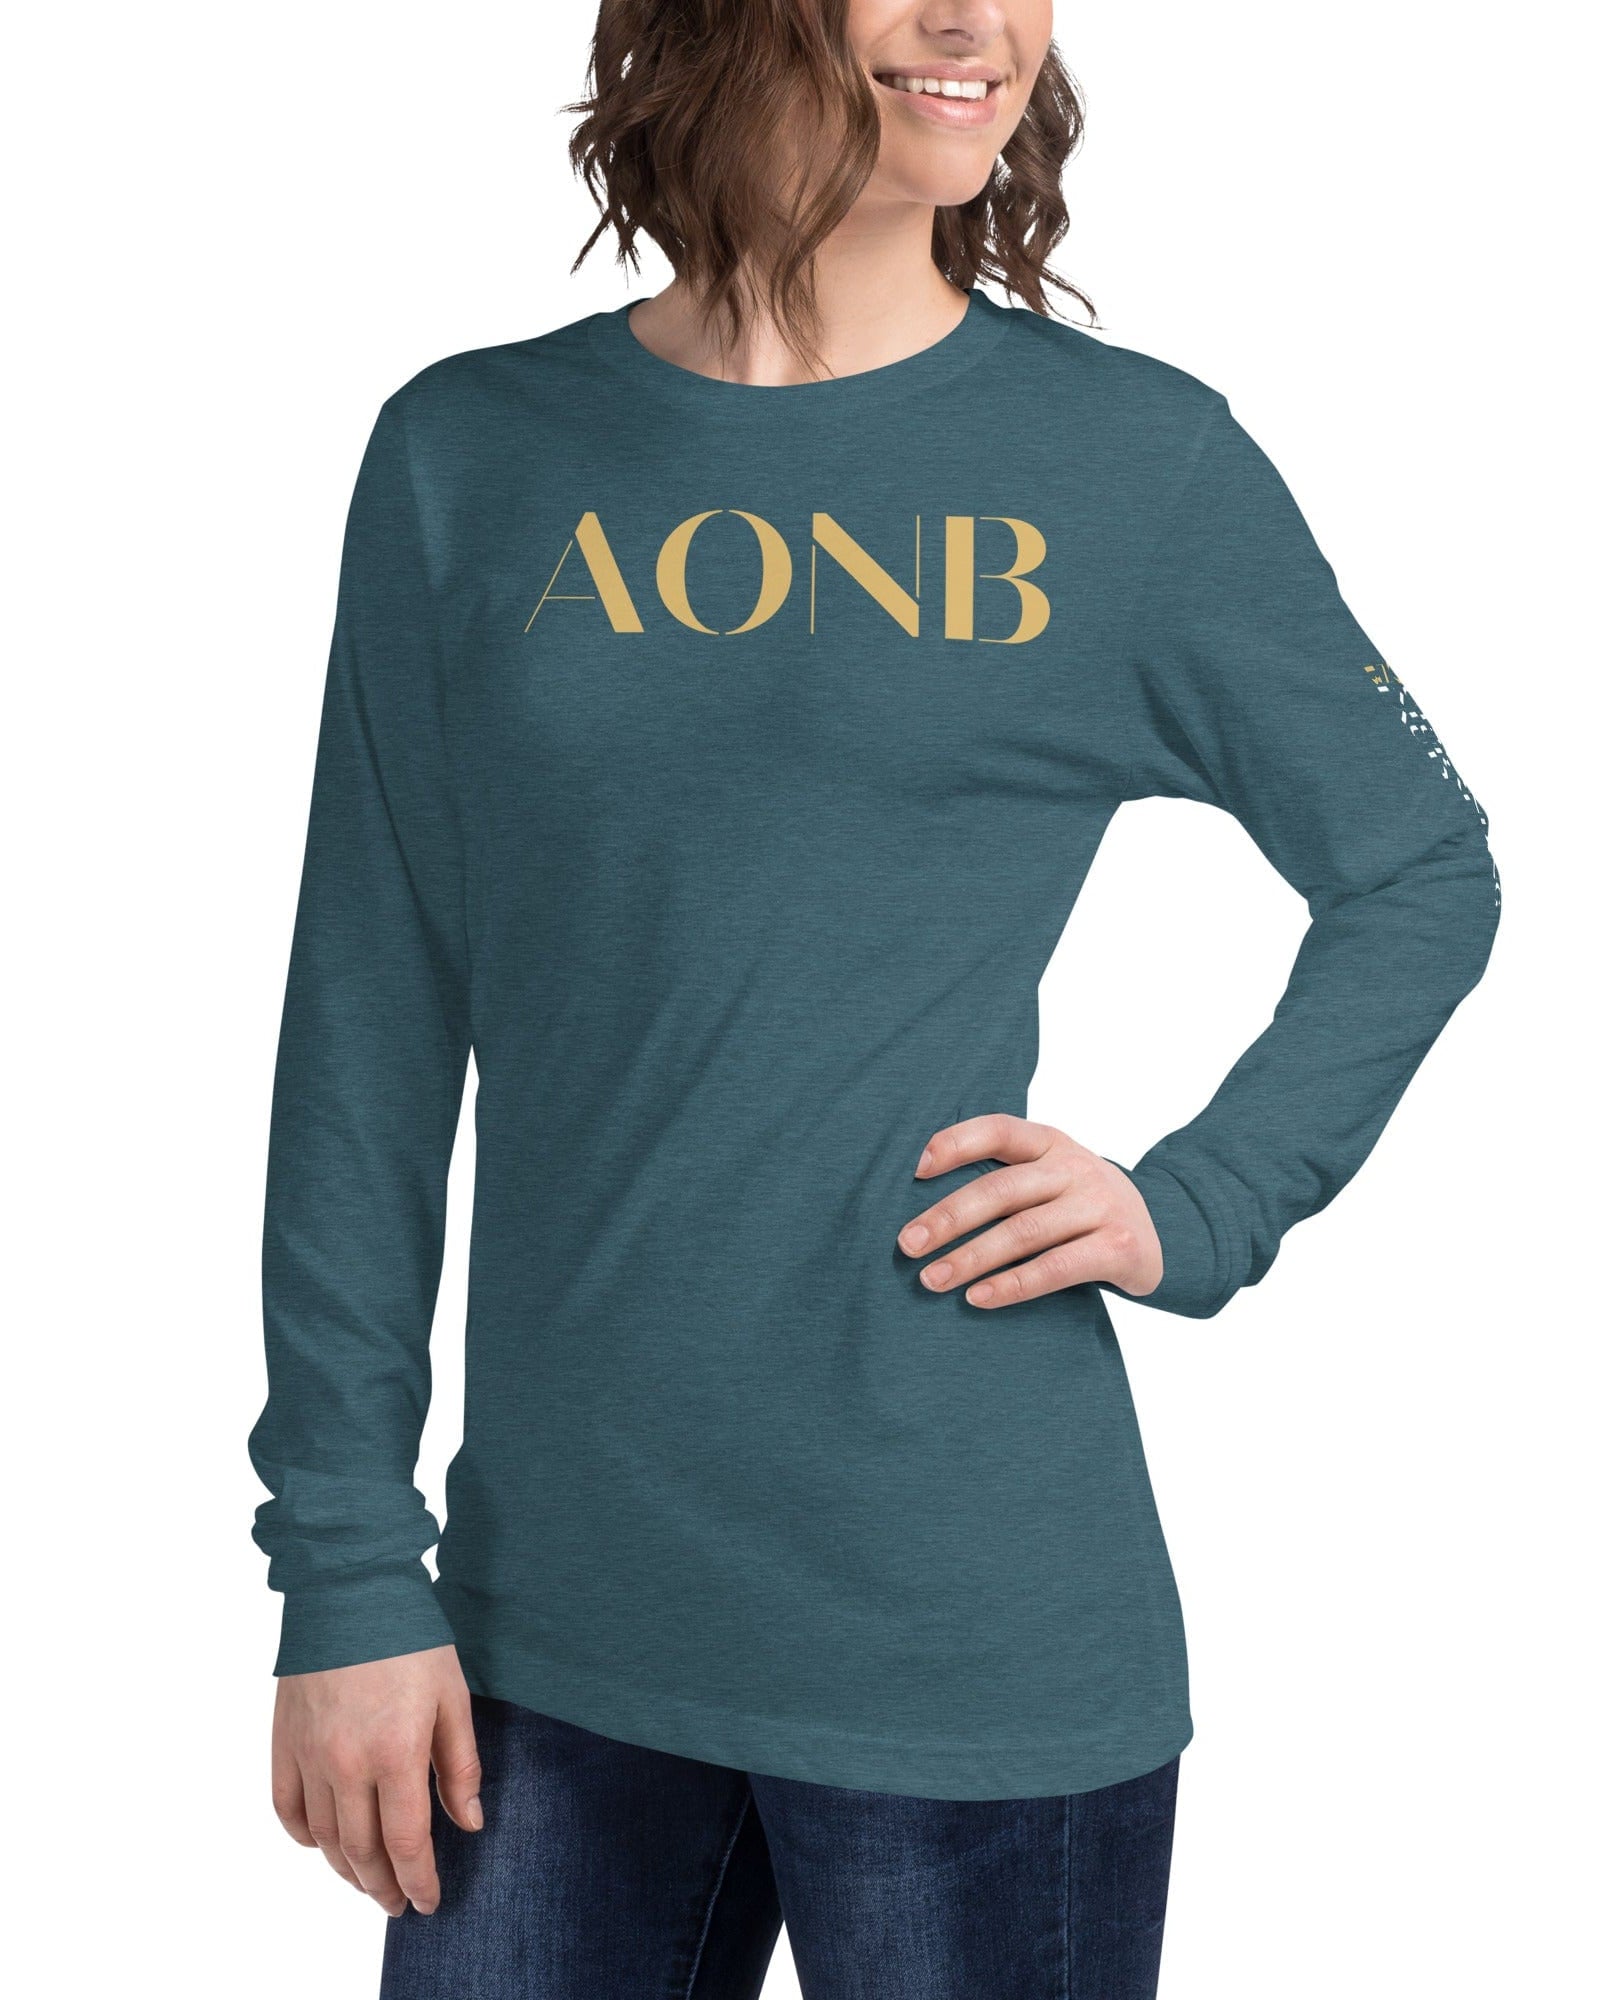 AONB Long-Sleeve Shirt | Area of Outstanding Natural Beauty Shirts & Tops Jolly & Goode